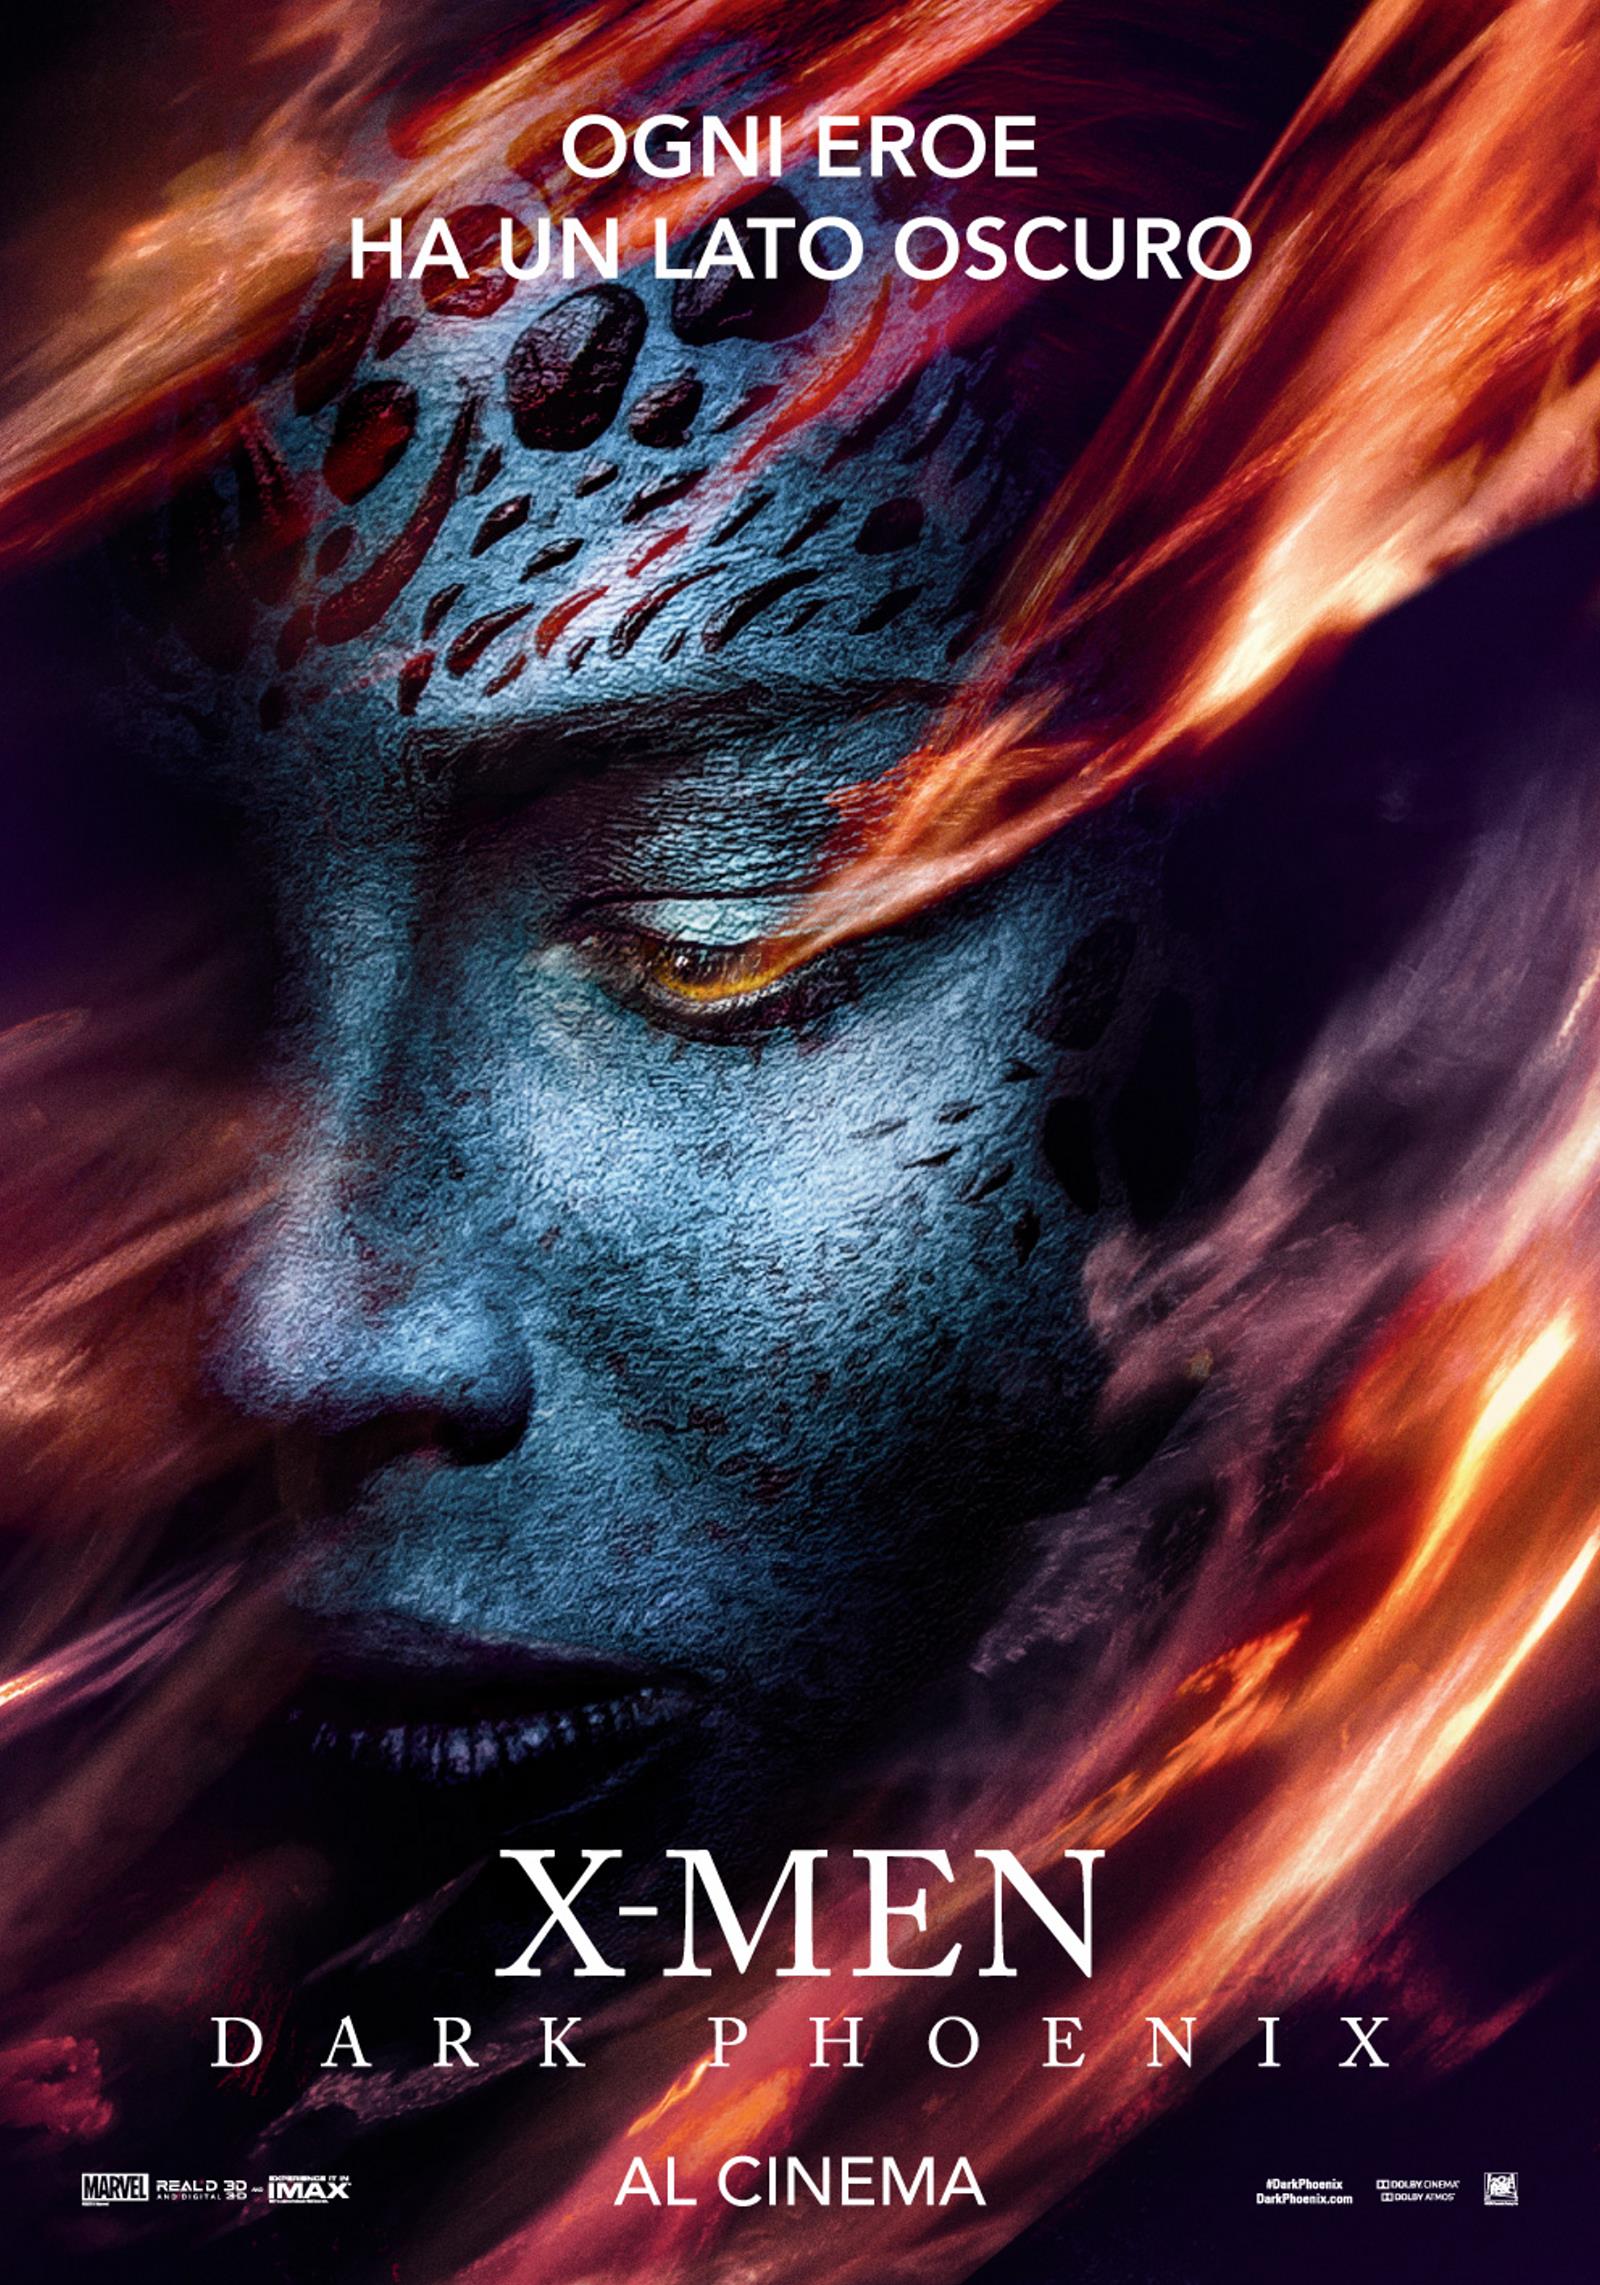 Foto, immagini, locandine X-Men: Dark Phoenix